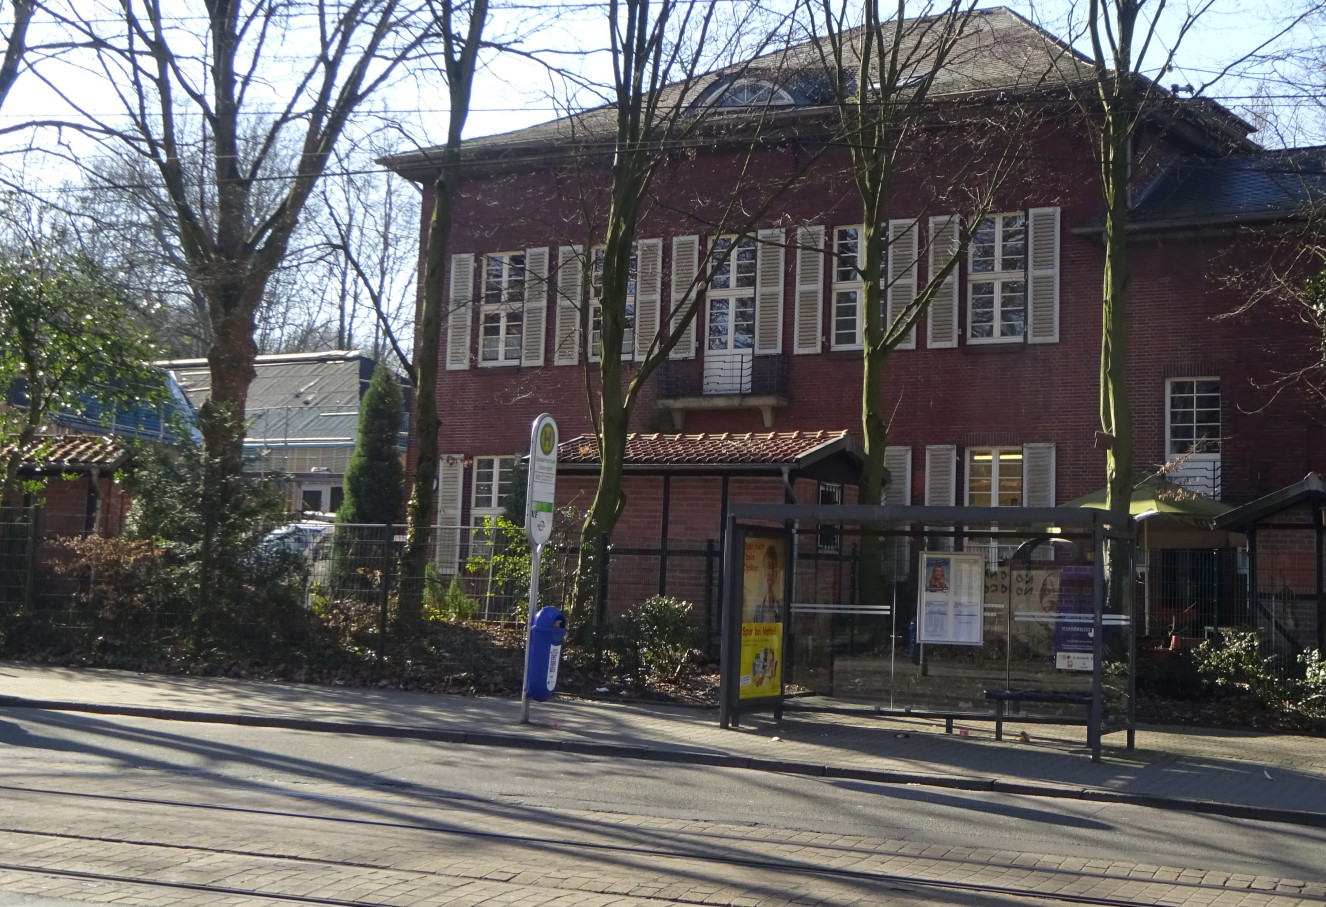 Haltestelle Gesamtschule Ückendorf